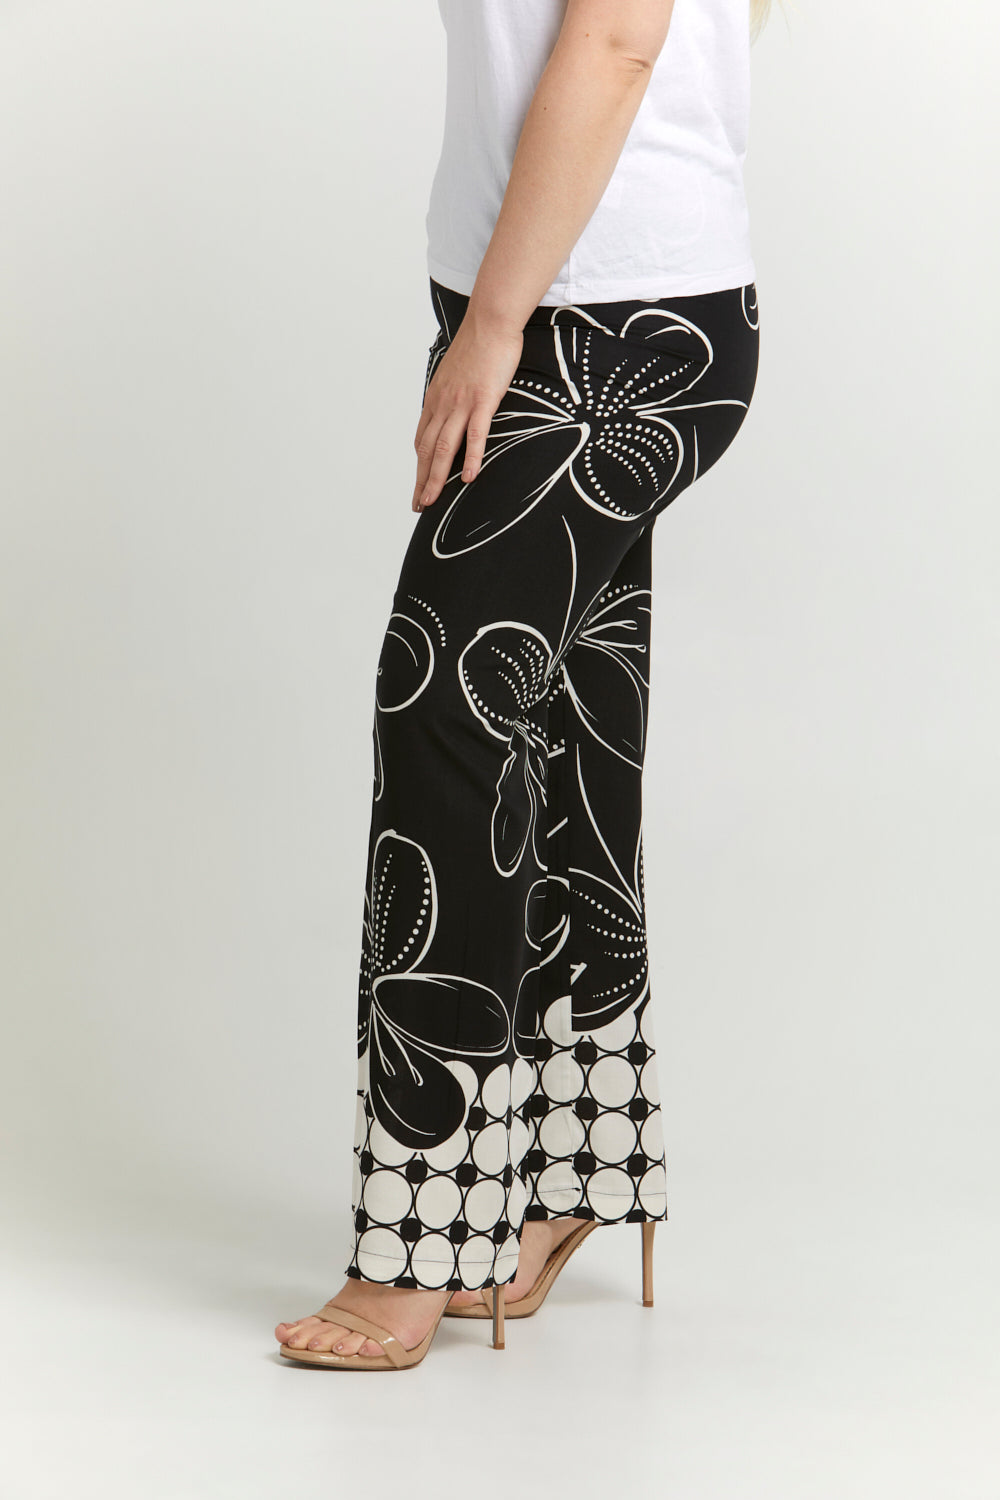 Oltretempo PANTS Plus Size Ava Black & White Floral Print Wide-Leg Pants